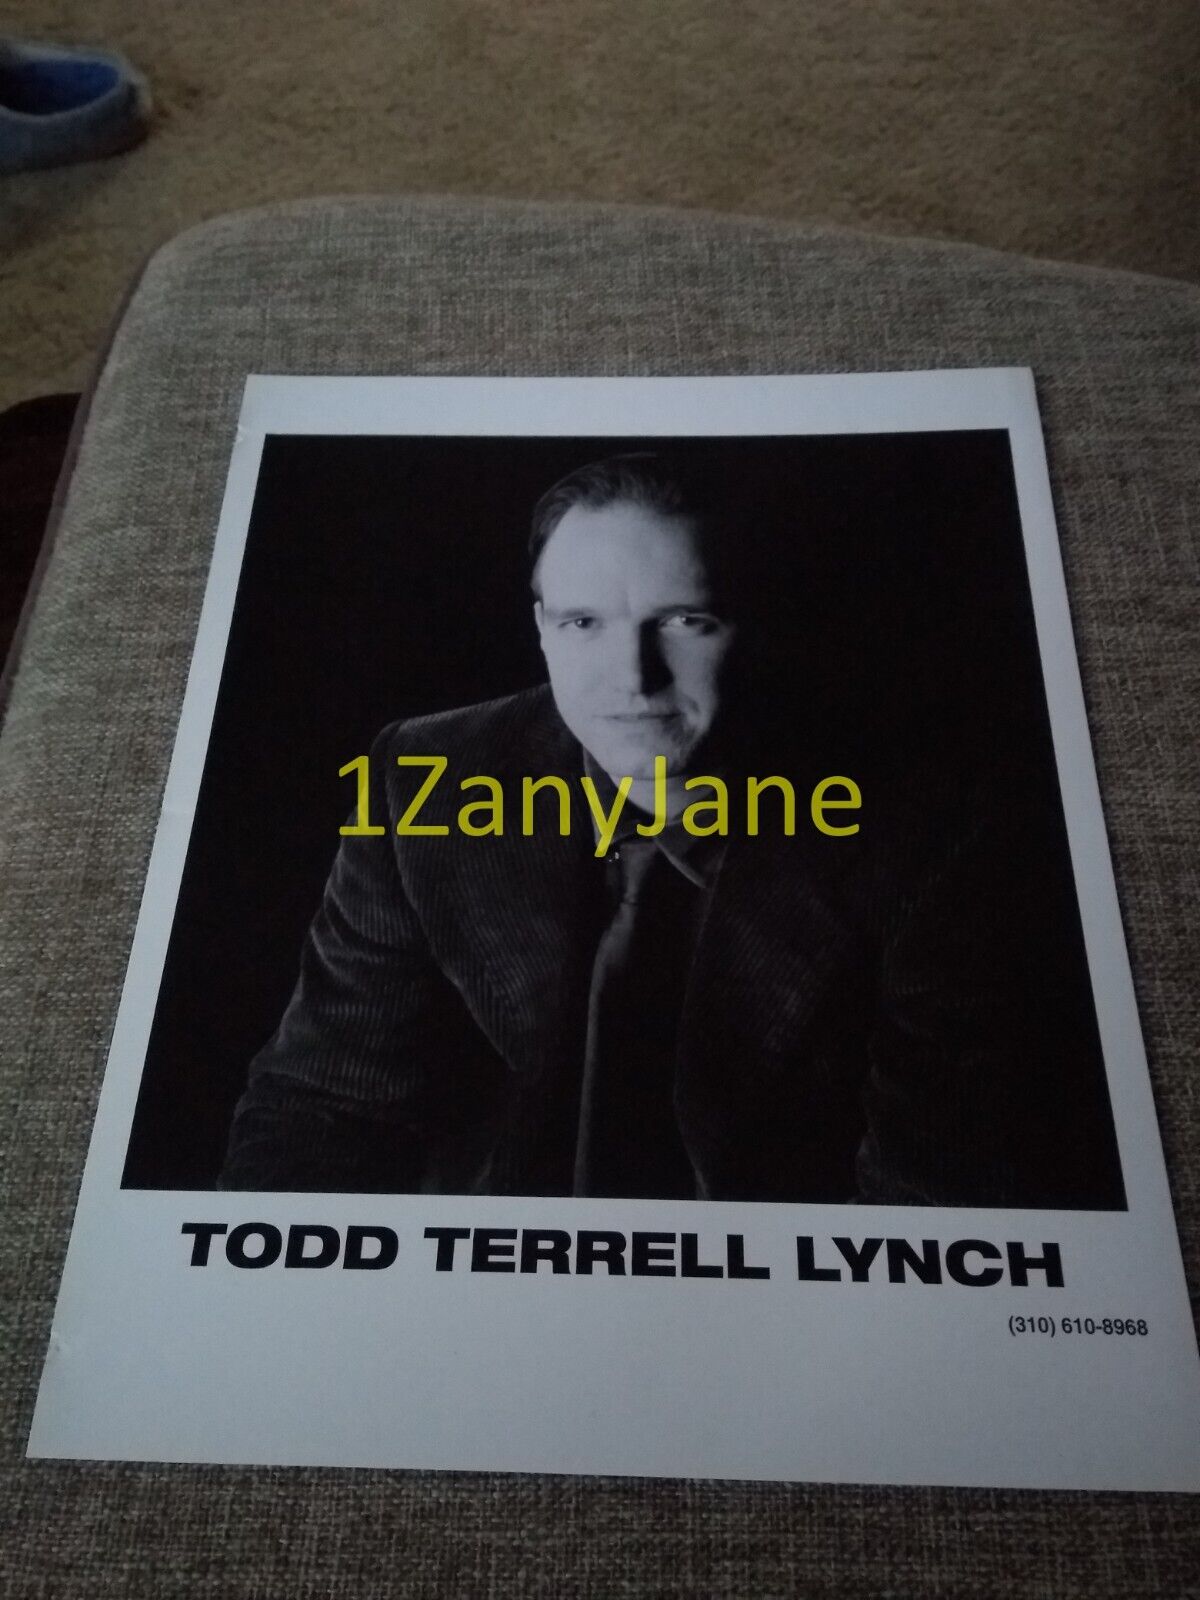 P685 Band 8x10 Press Photo PROMO MEDIA TODD TERRELL LYNCH B & W 1 MAN